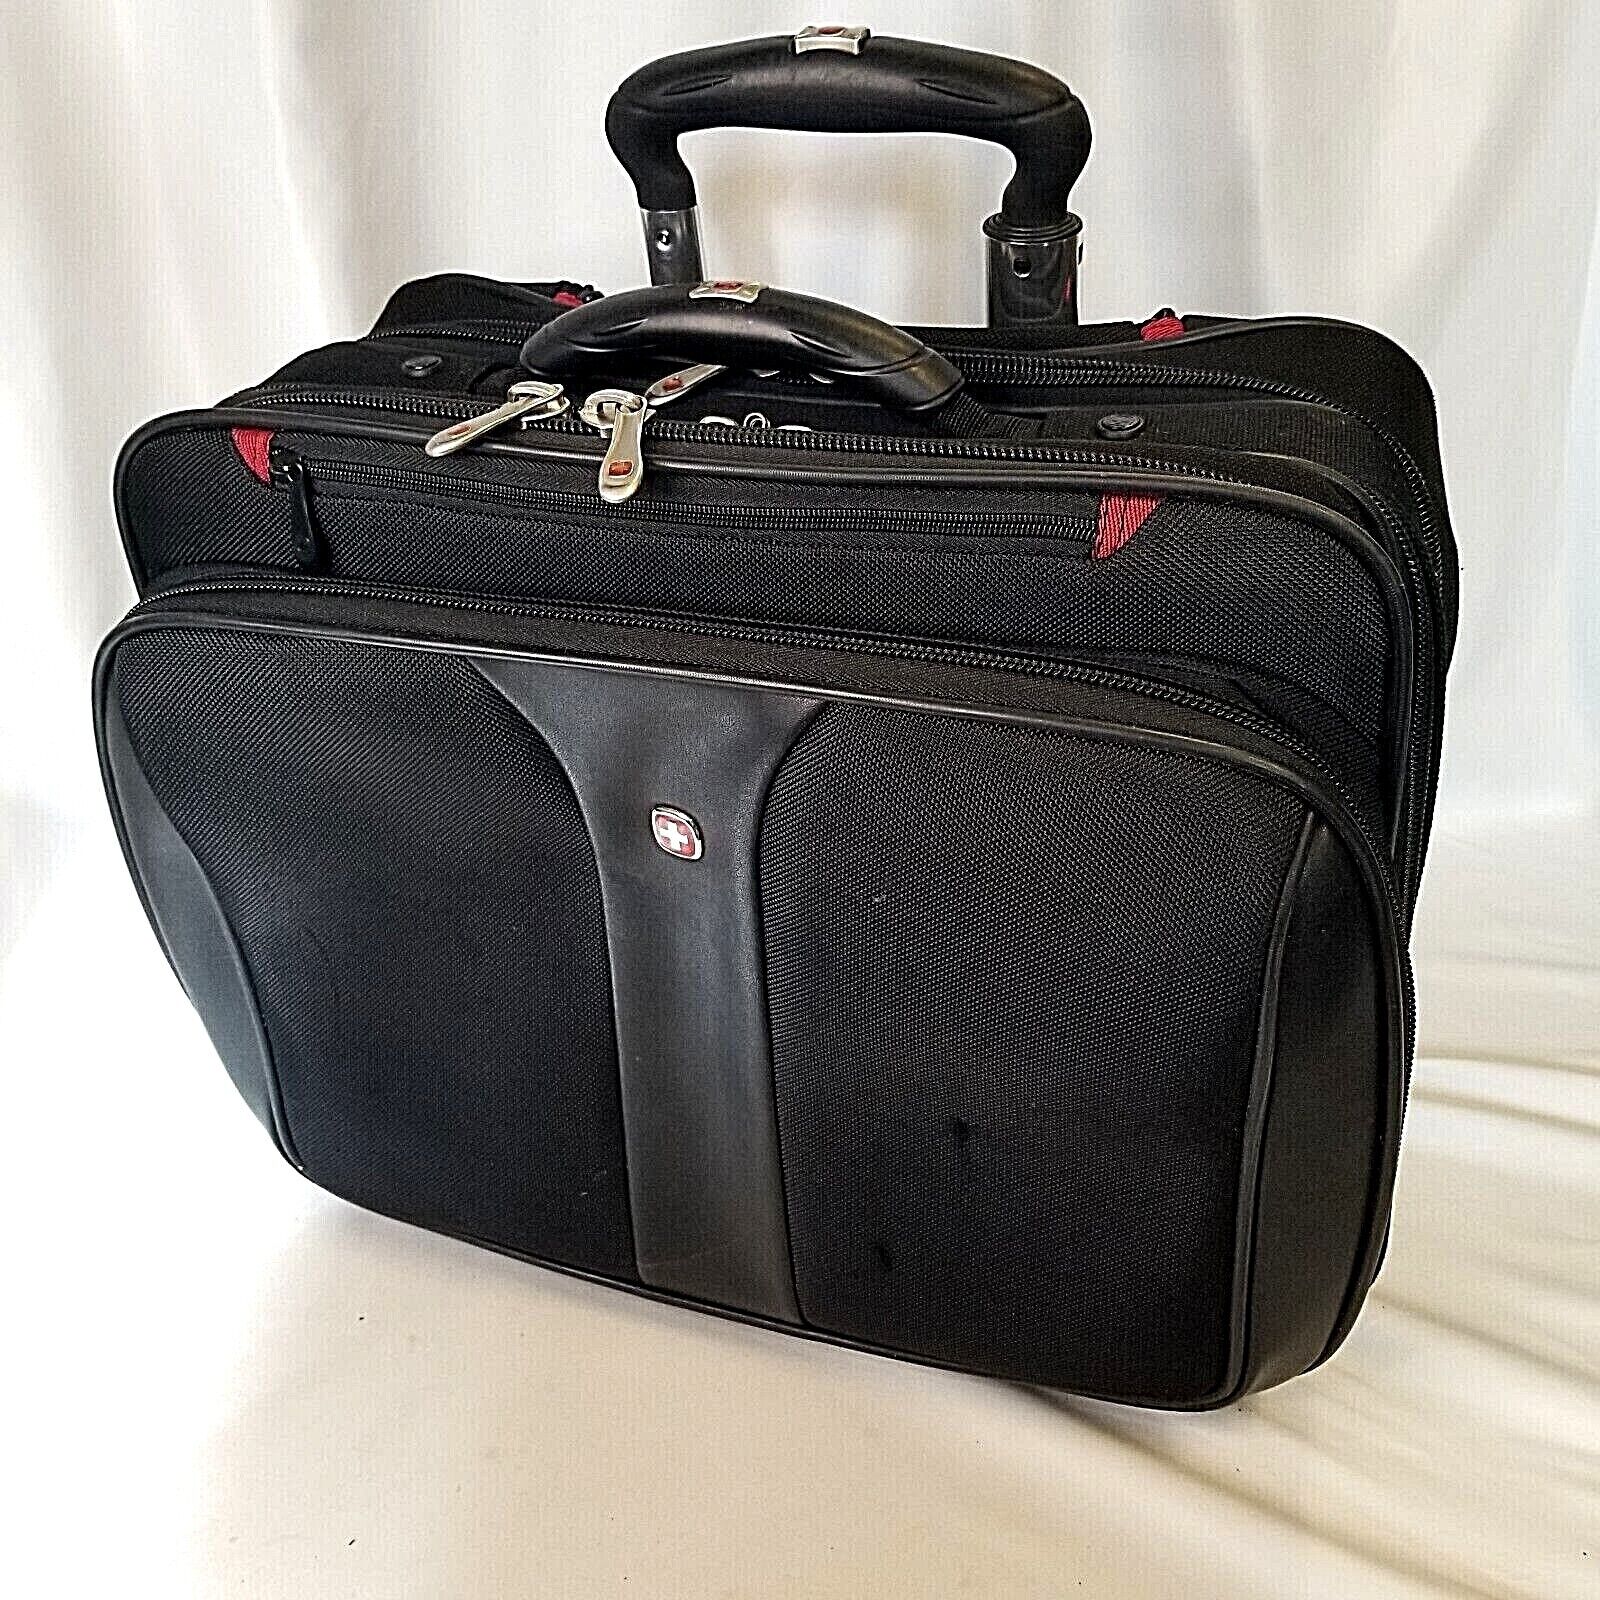  Wenger Swiss Gear Patriot Rolling Business Laptop Bag 